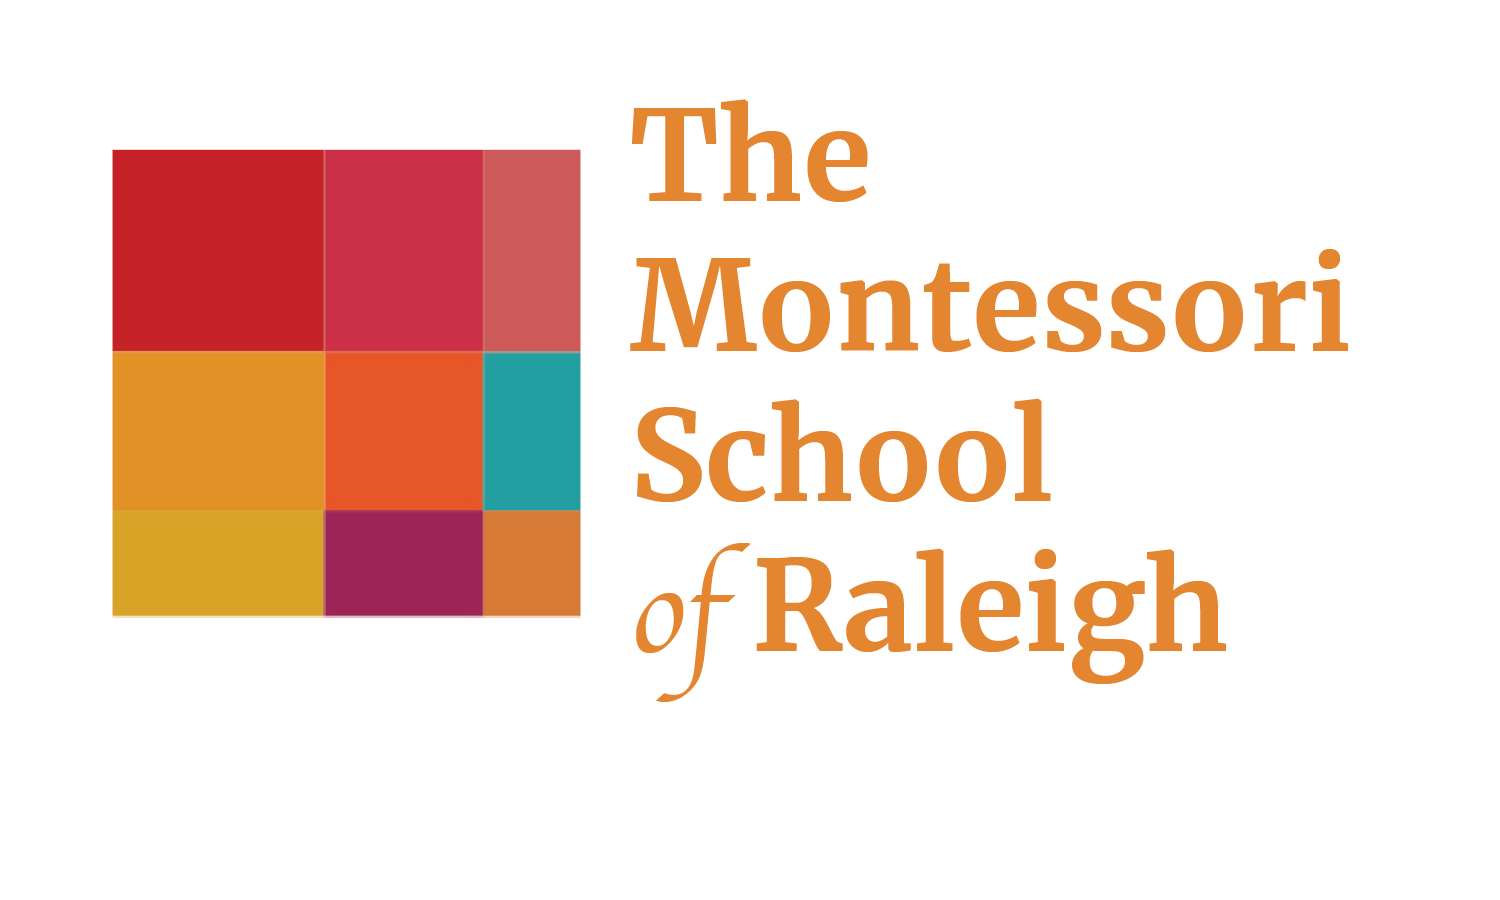 The Montessori School of Raleigh